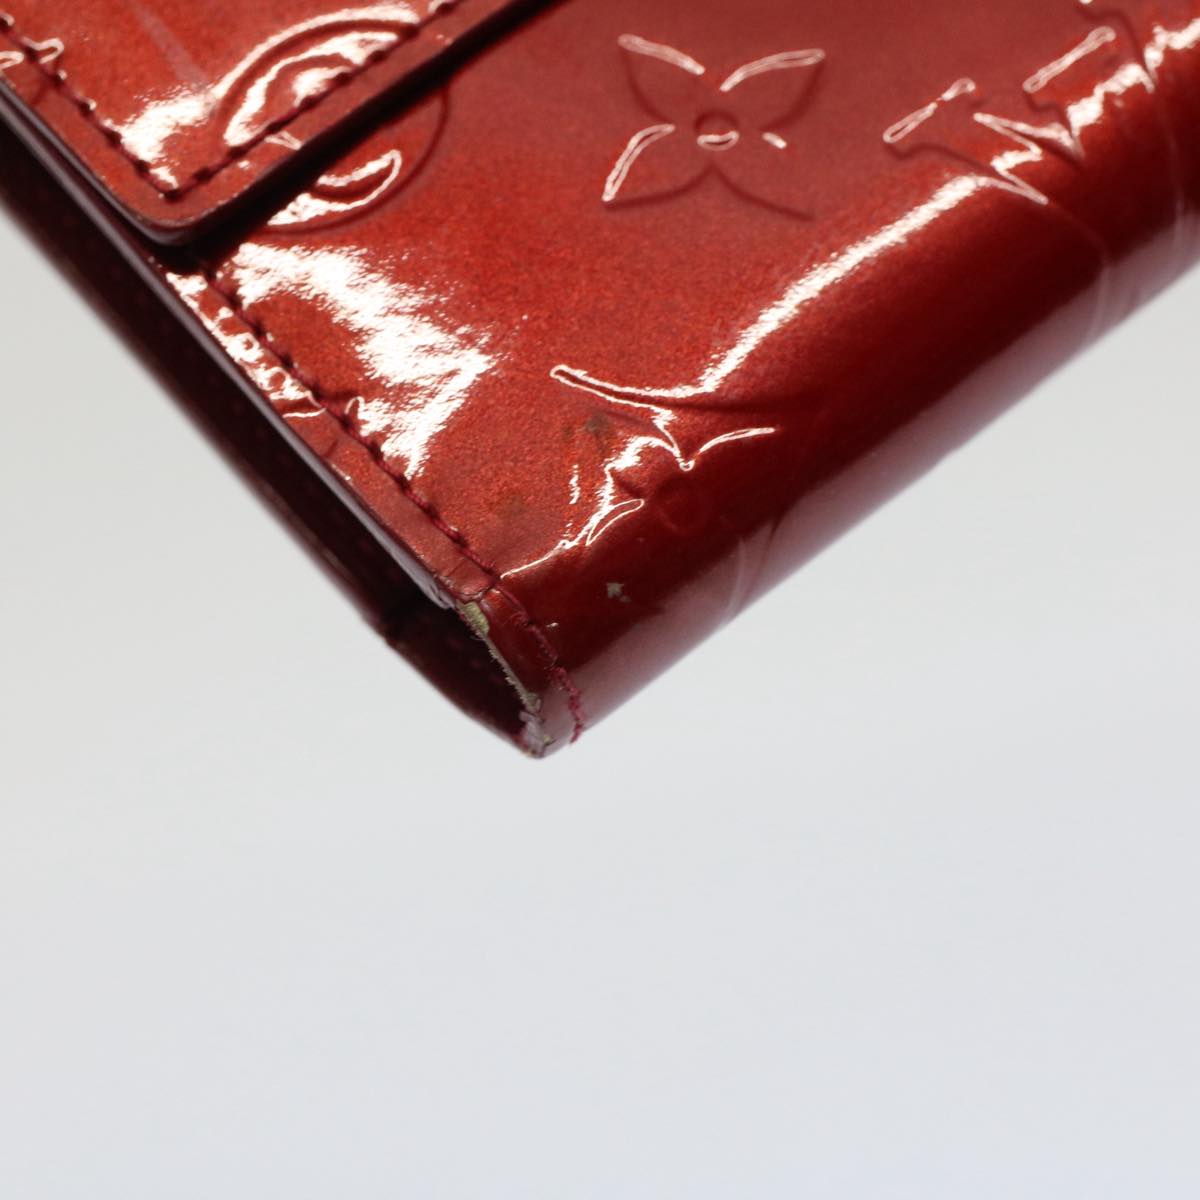 LOUIS VUITTON Vernis Porte Tresol International Wallet Red M91165 LV Auth 52501